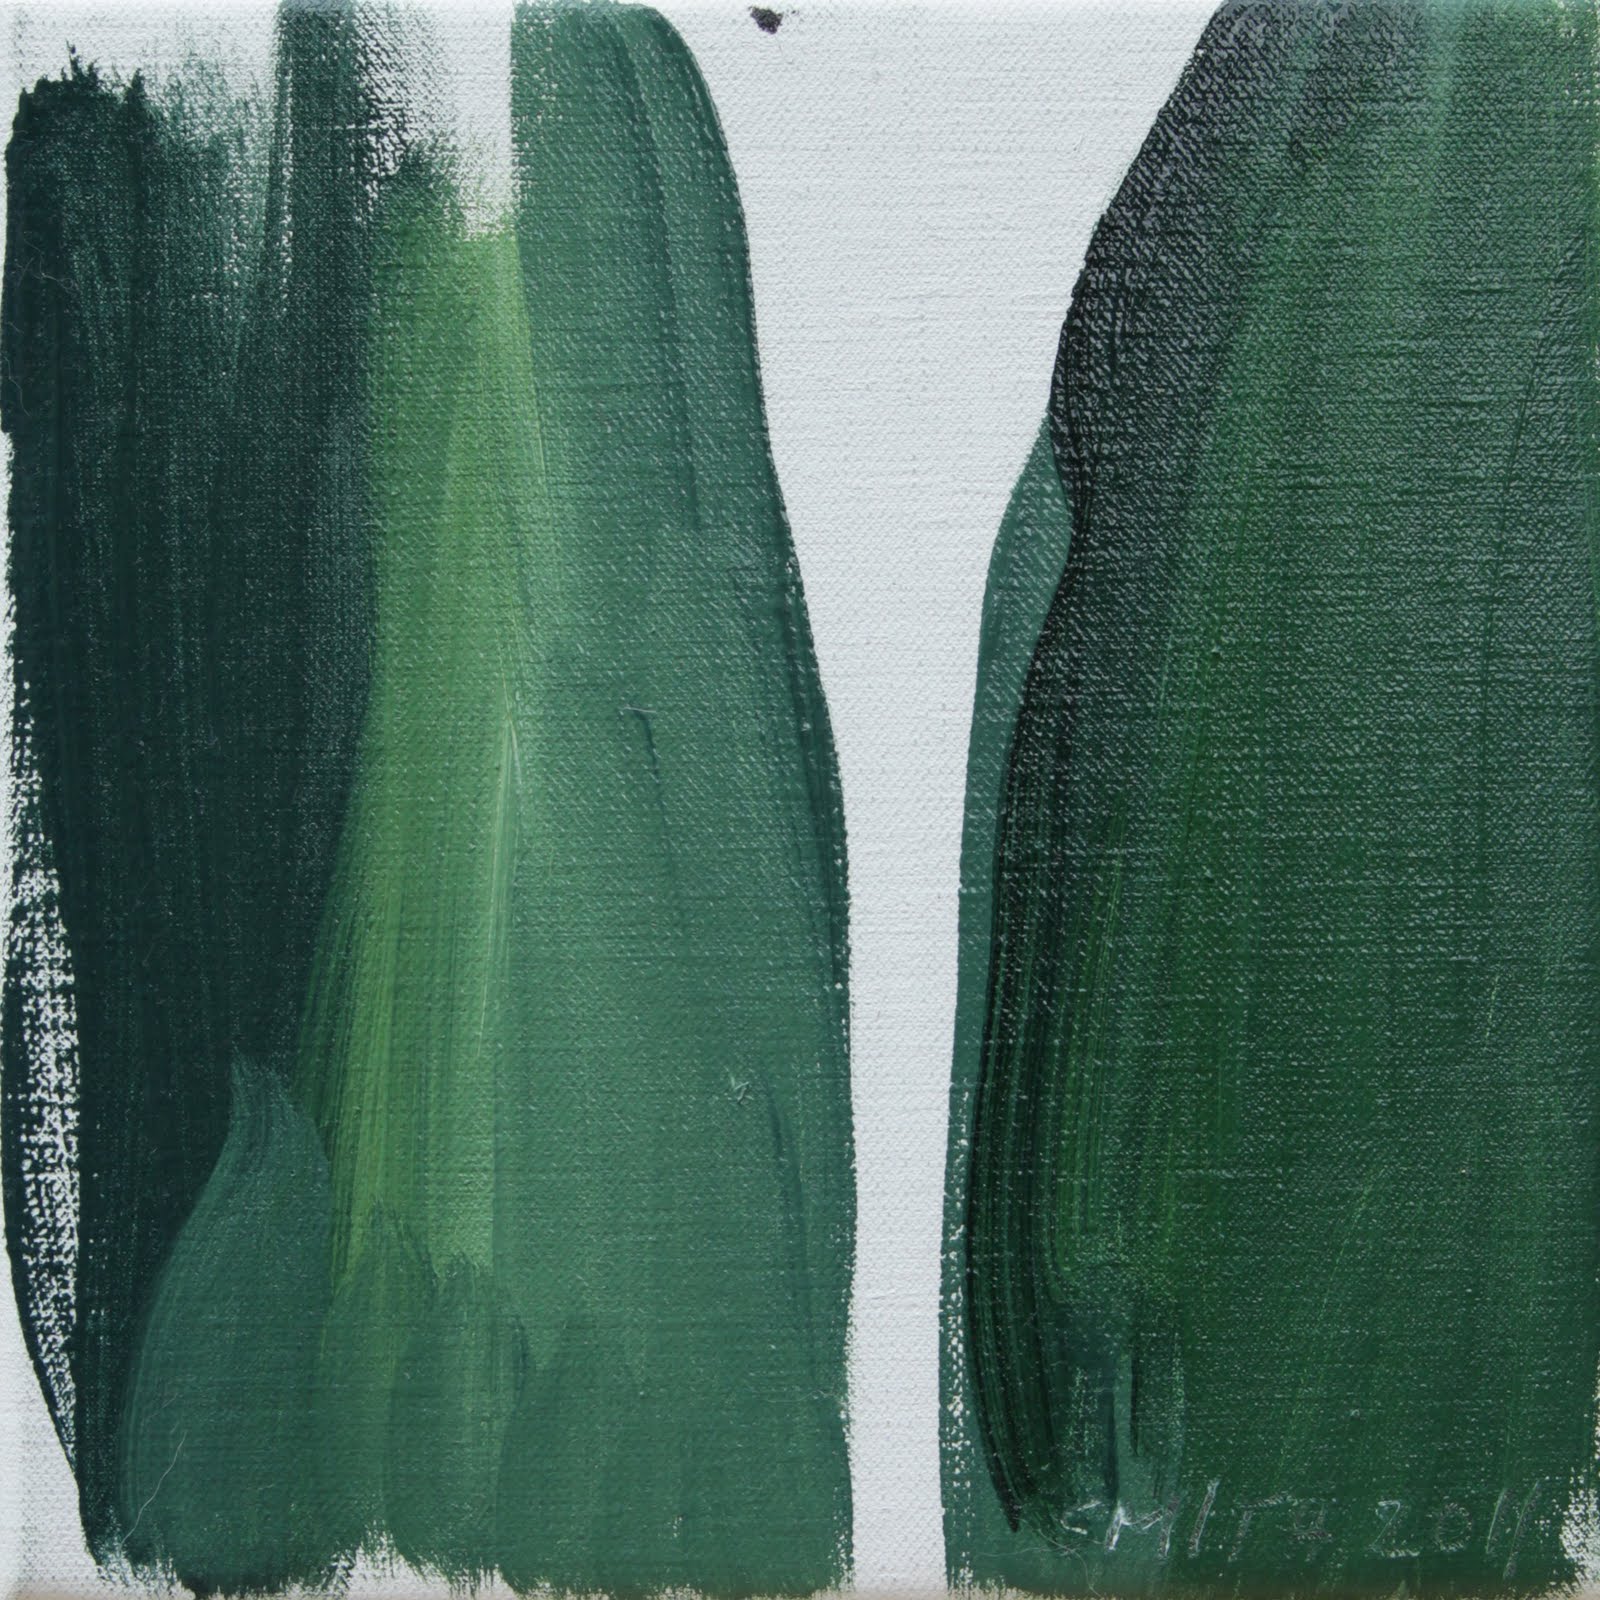 Emma Smith, "green thigh" (2011).